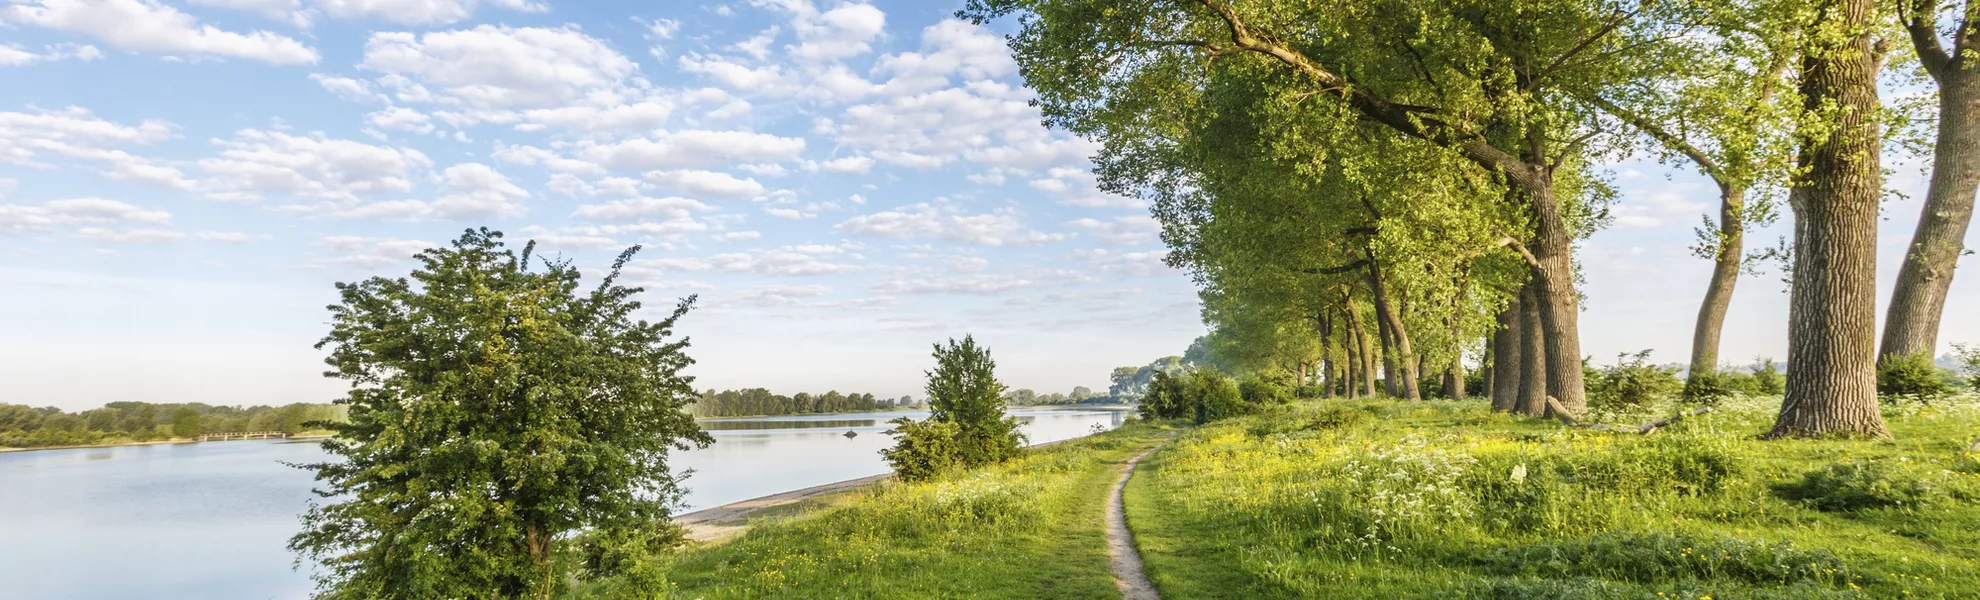 Naturschutzgebiet bei Nijmegen, Ooijpolder - © Copyright (c) 2017 Photodigitaal.nl/Shutterstock.  No use without permission.